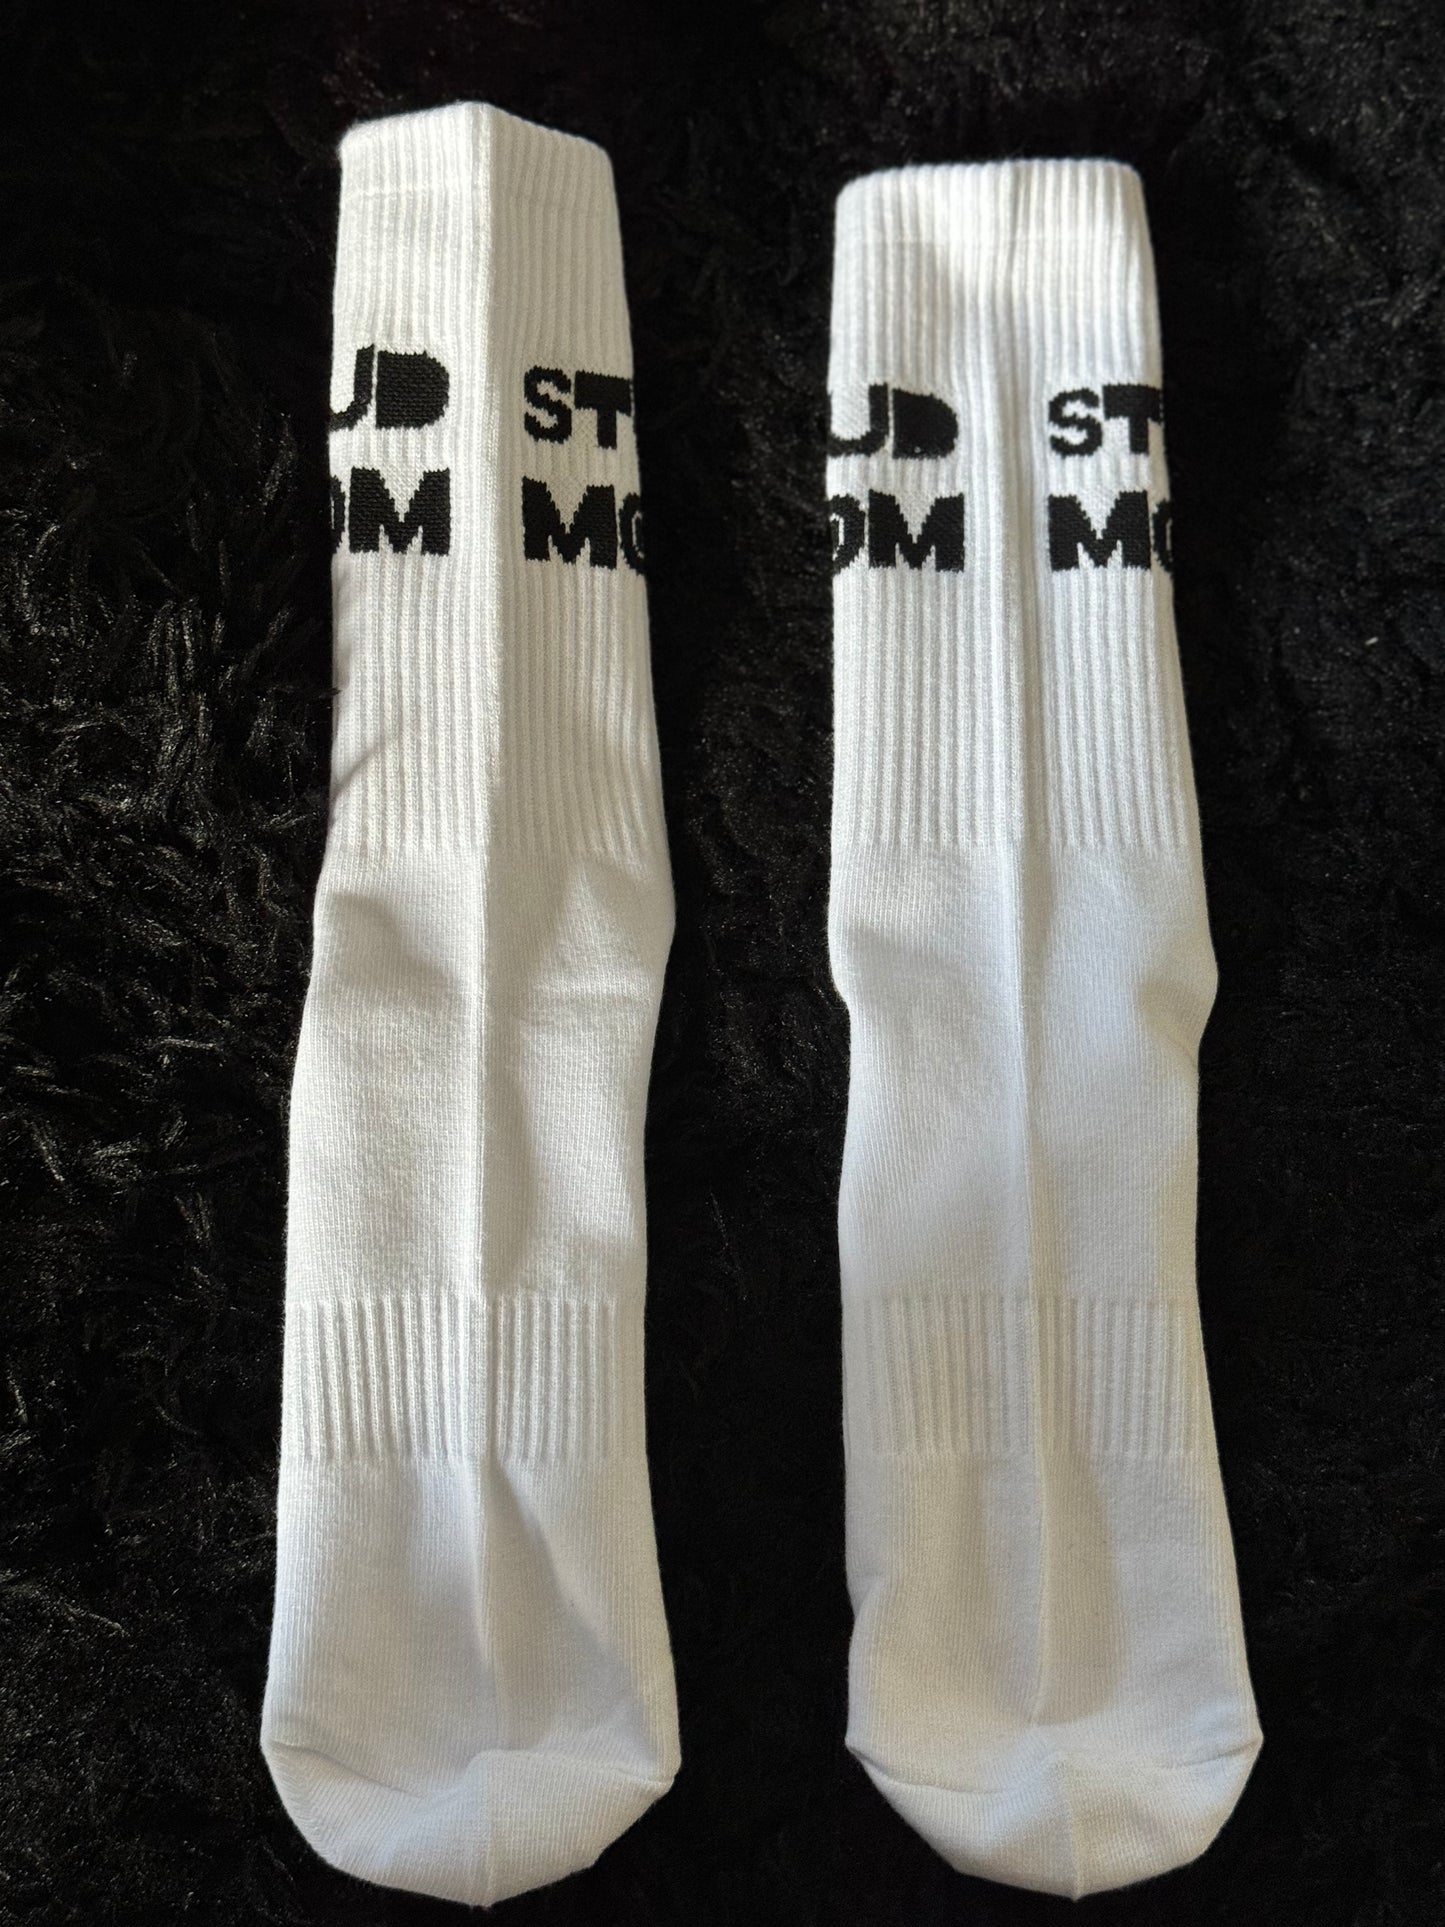 StudMom Socks